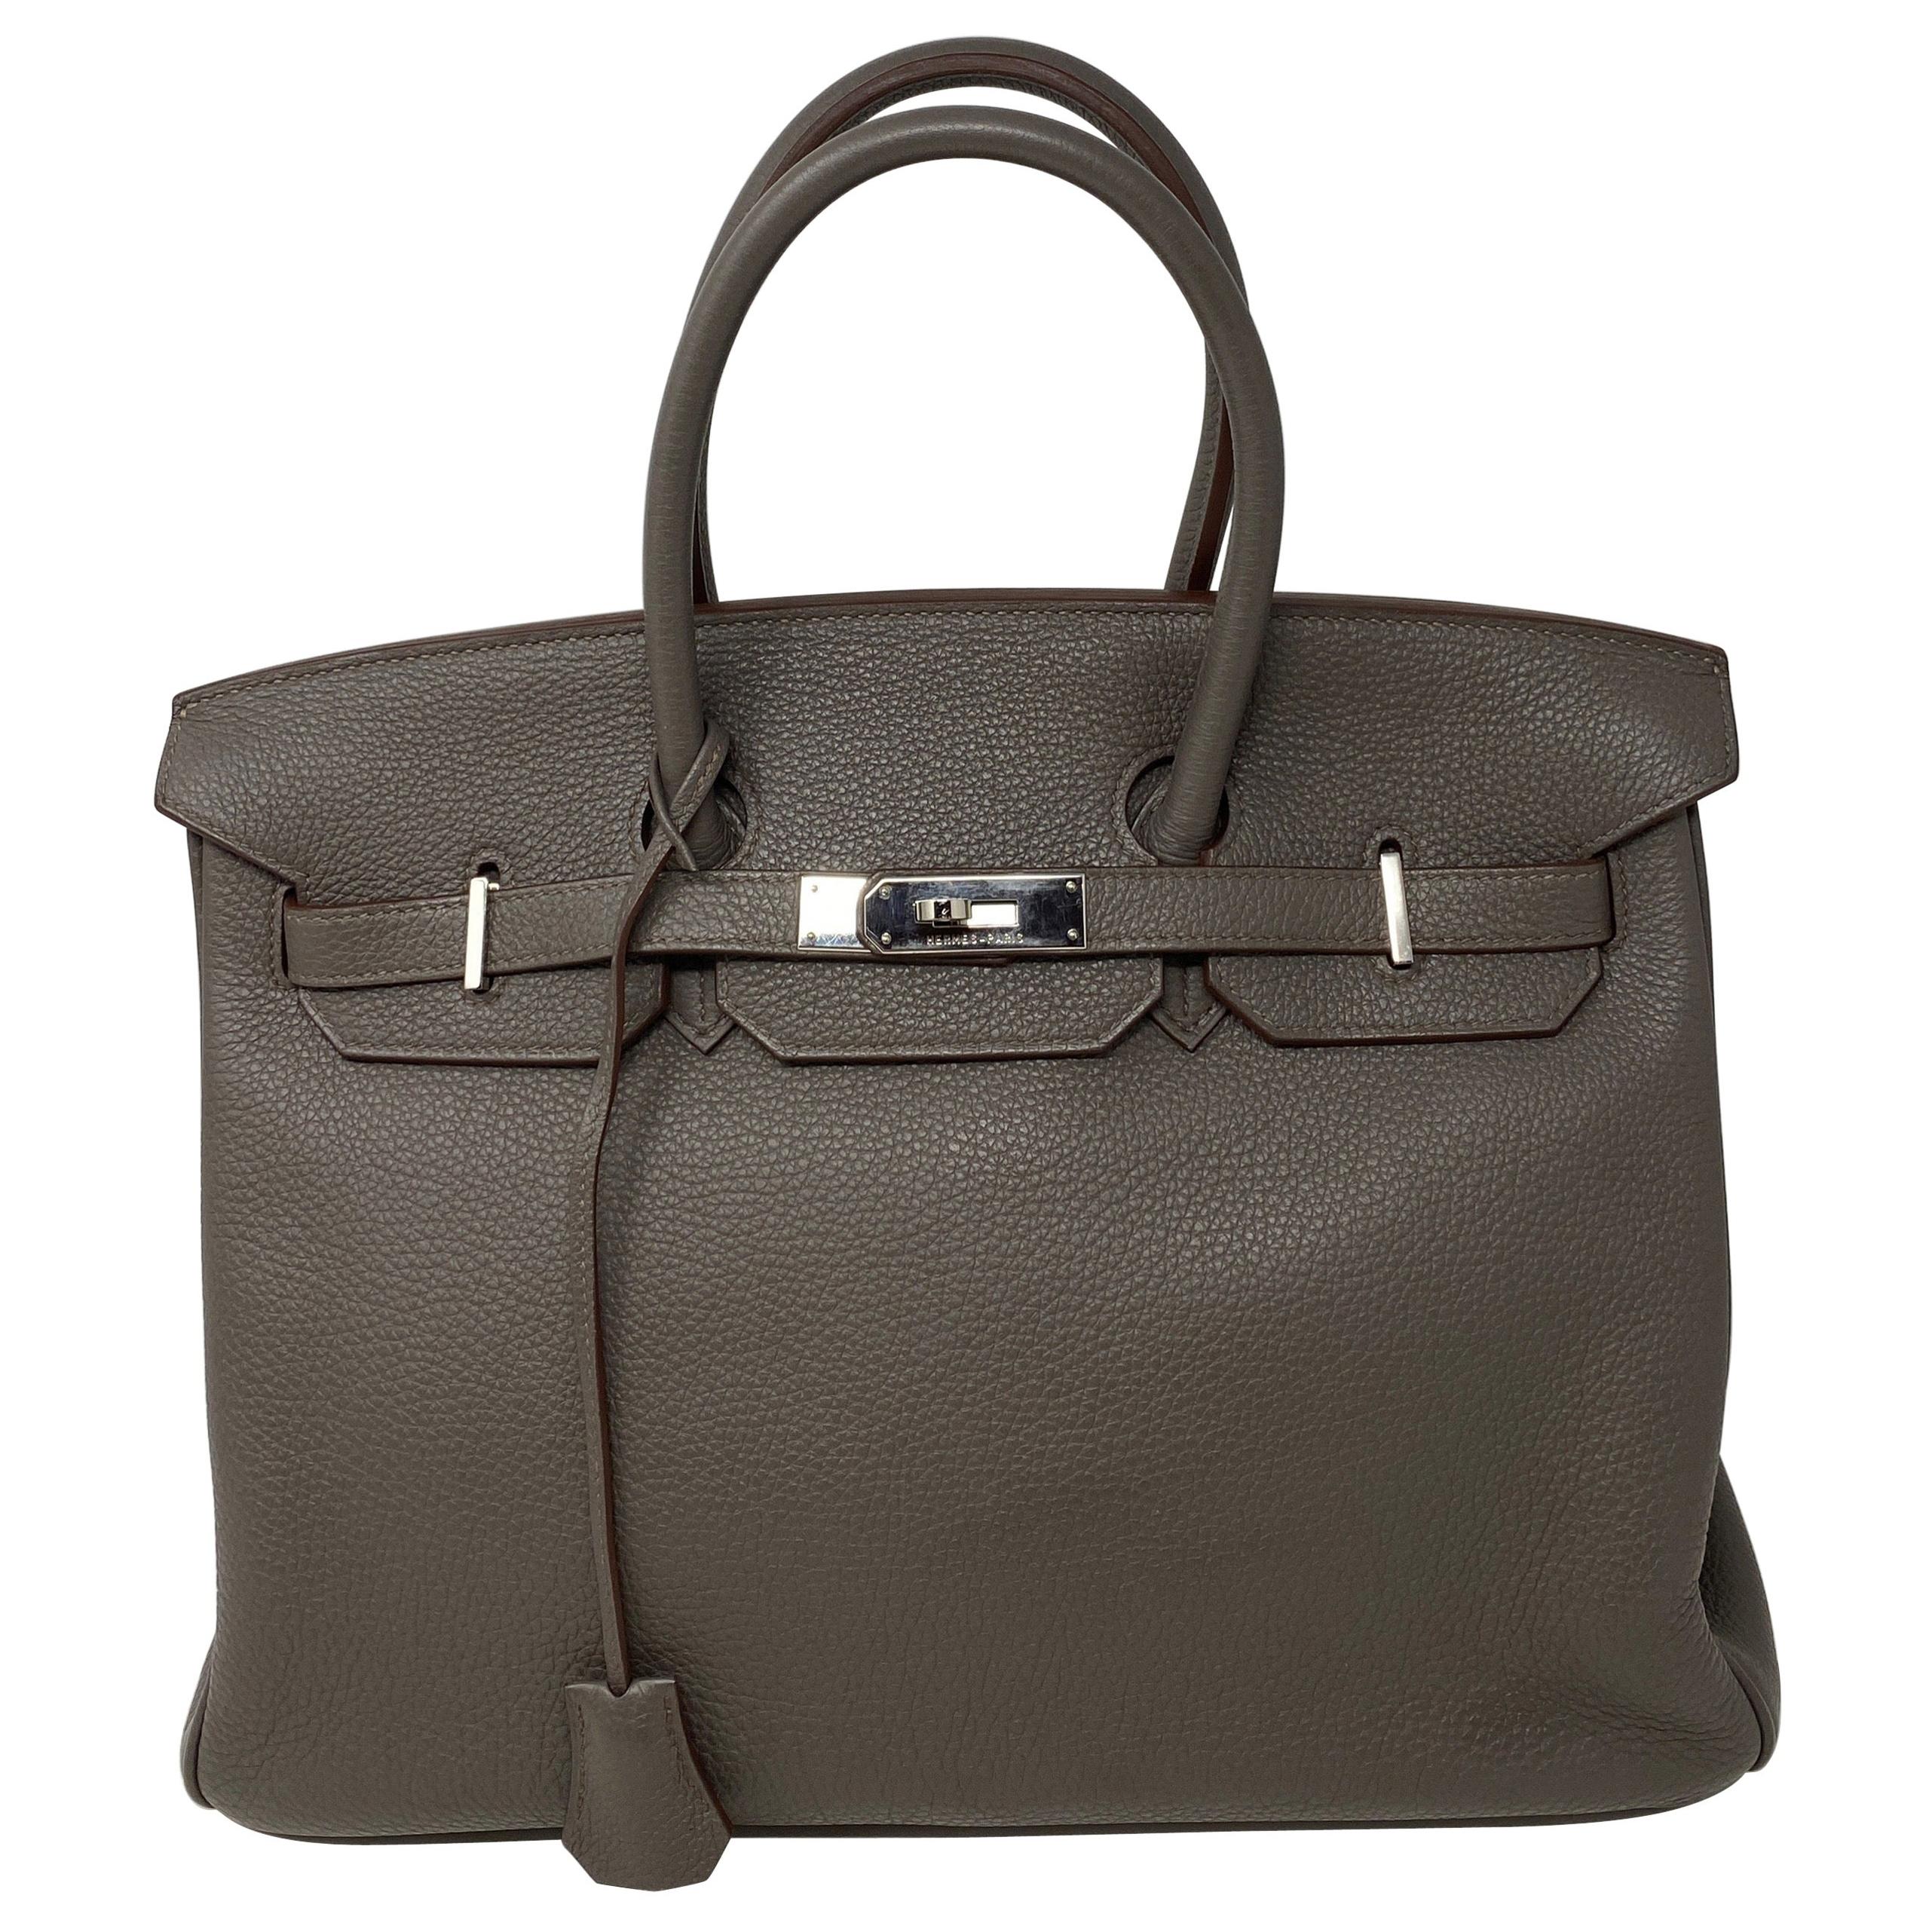 Hermes Birkin 35 Etain Togo Leather Bag 